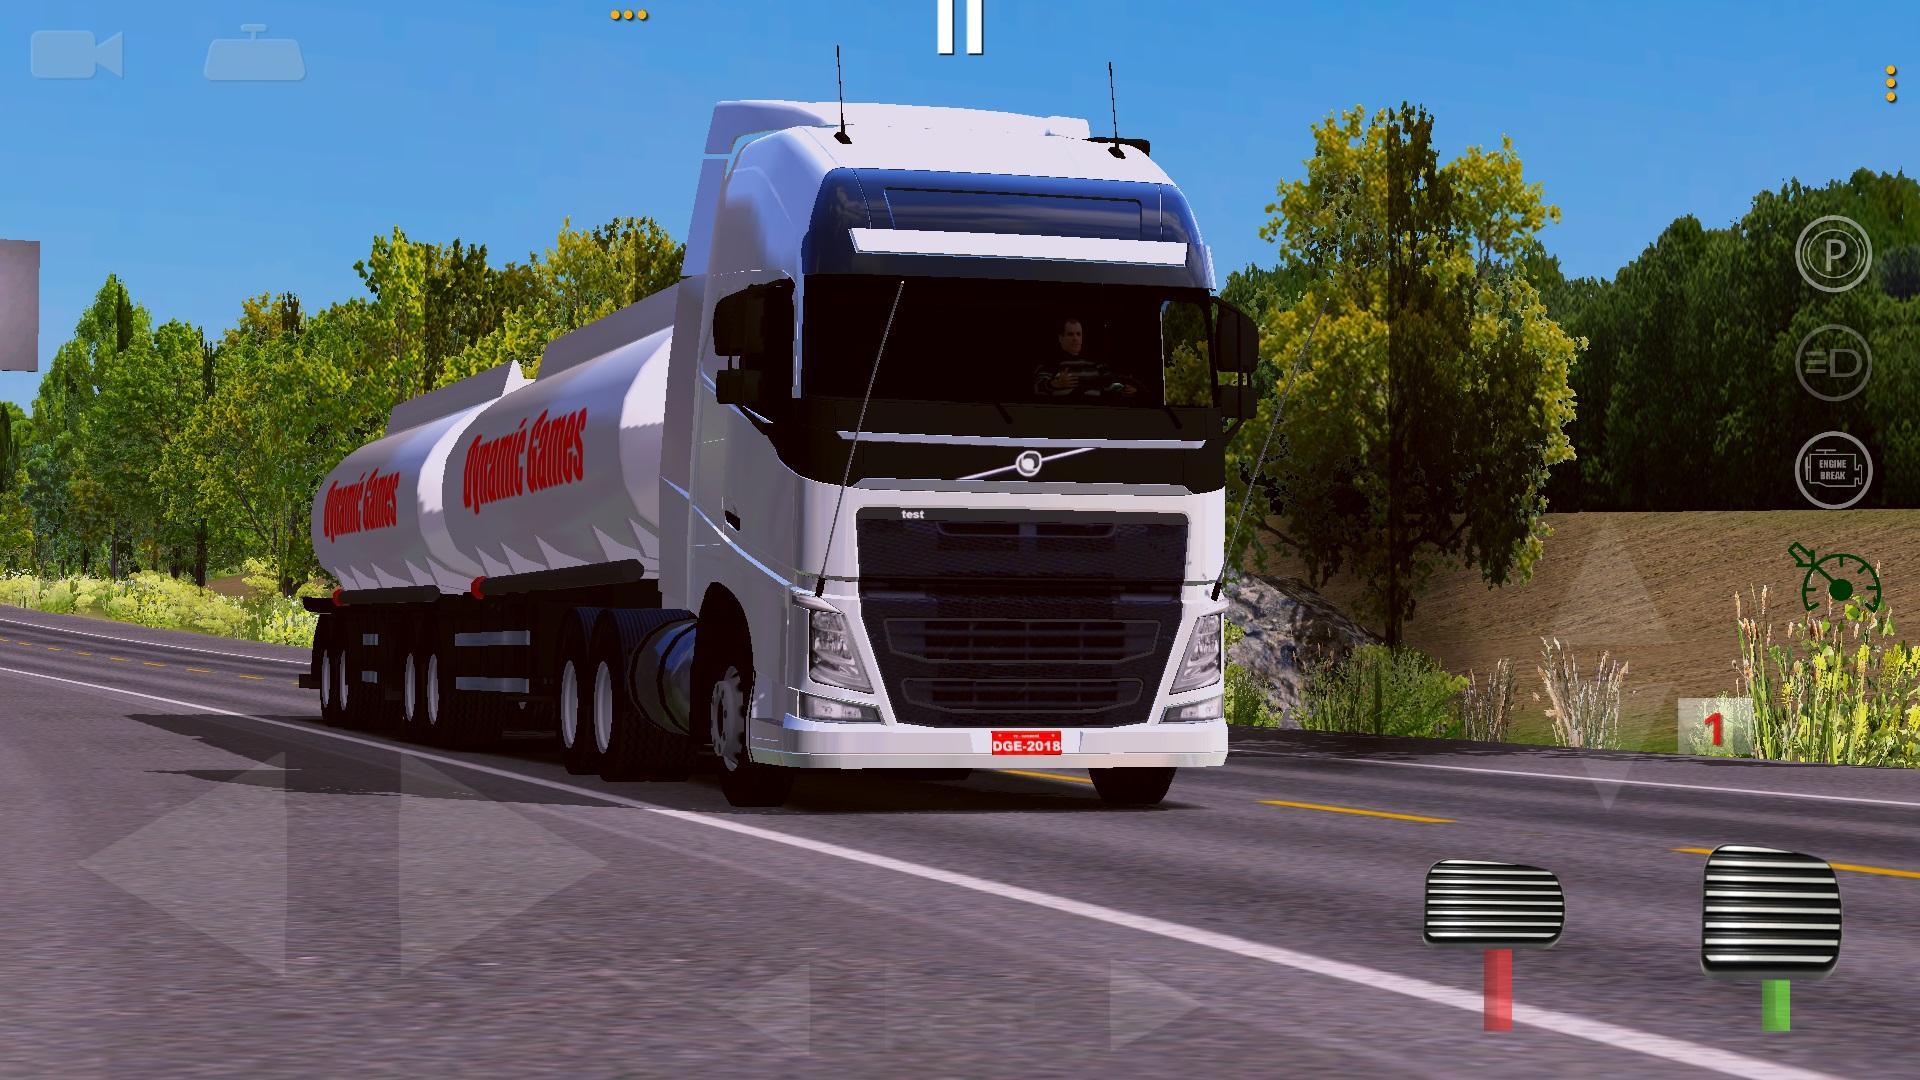 Roblox vehicle simulator trailer 1